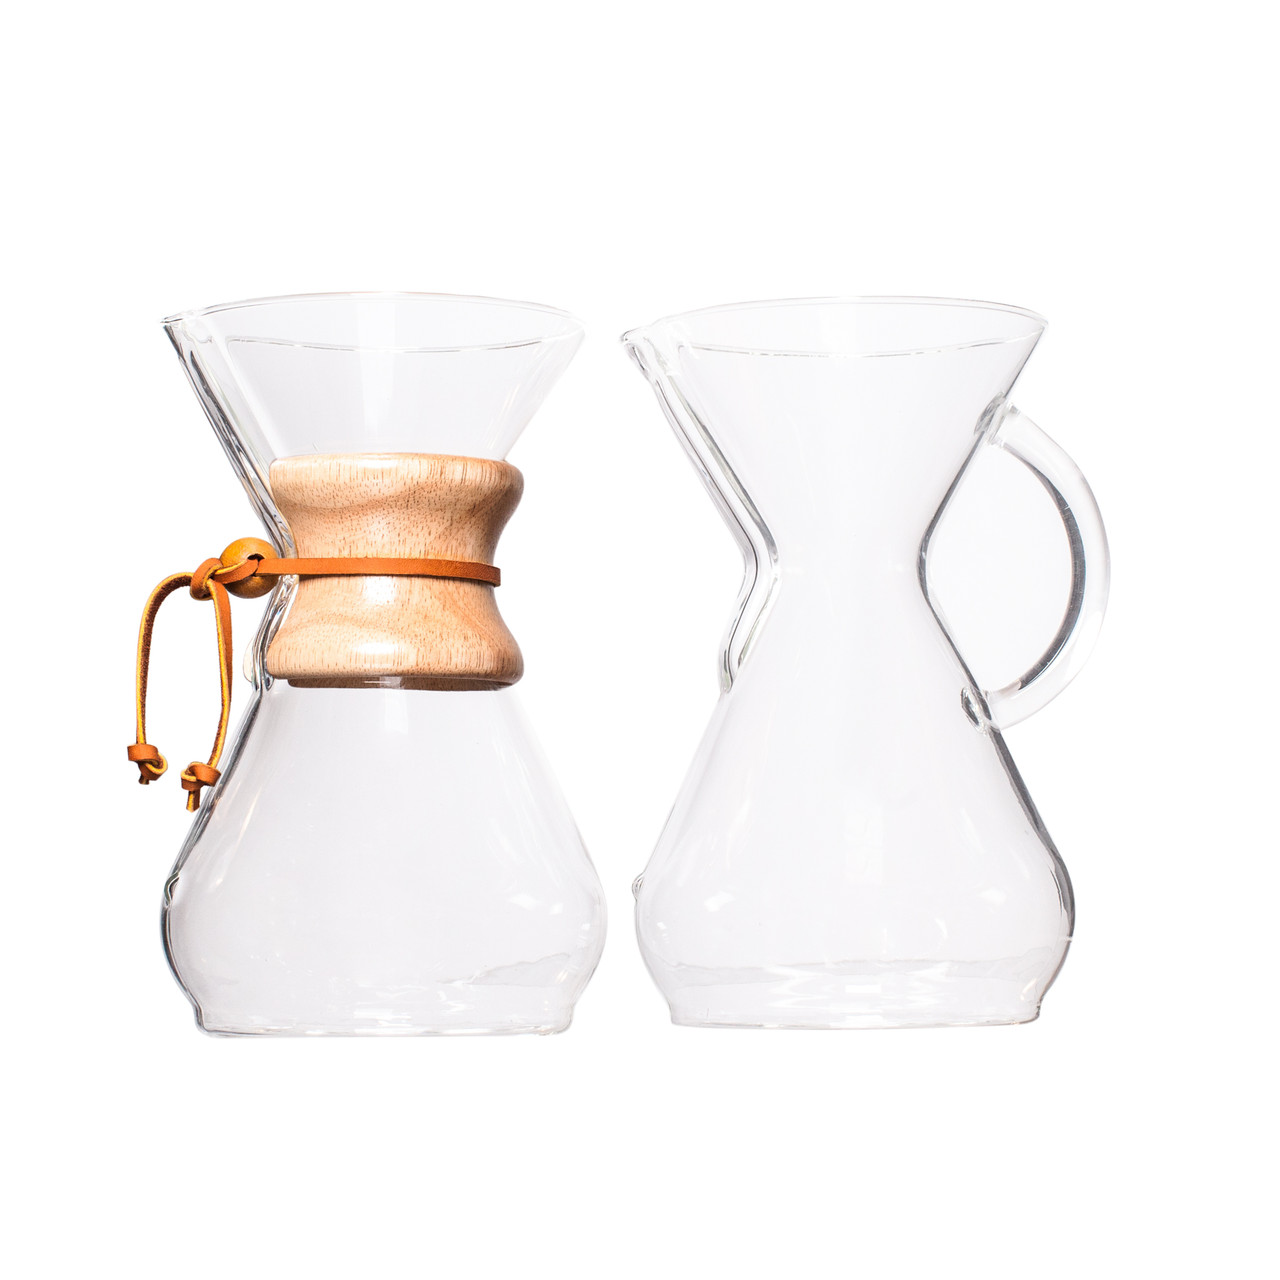 Chemex 8-Cup Coffee Maker  Chemex coffee maker, Pour over coffee maker, Coffee  maker